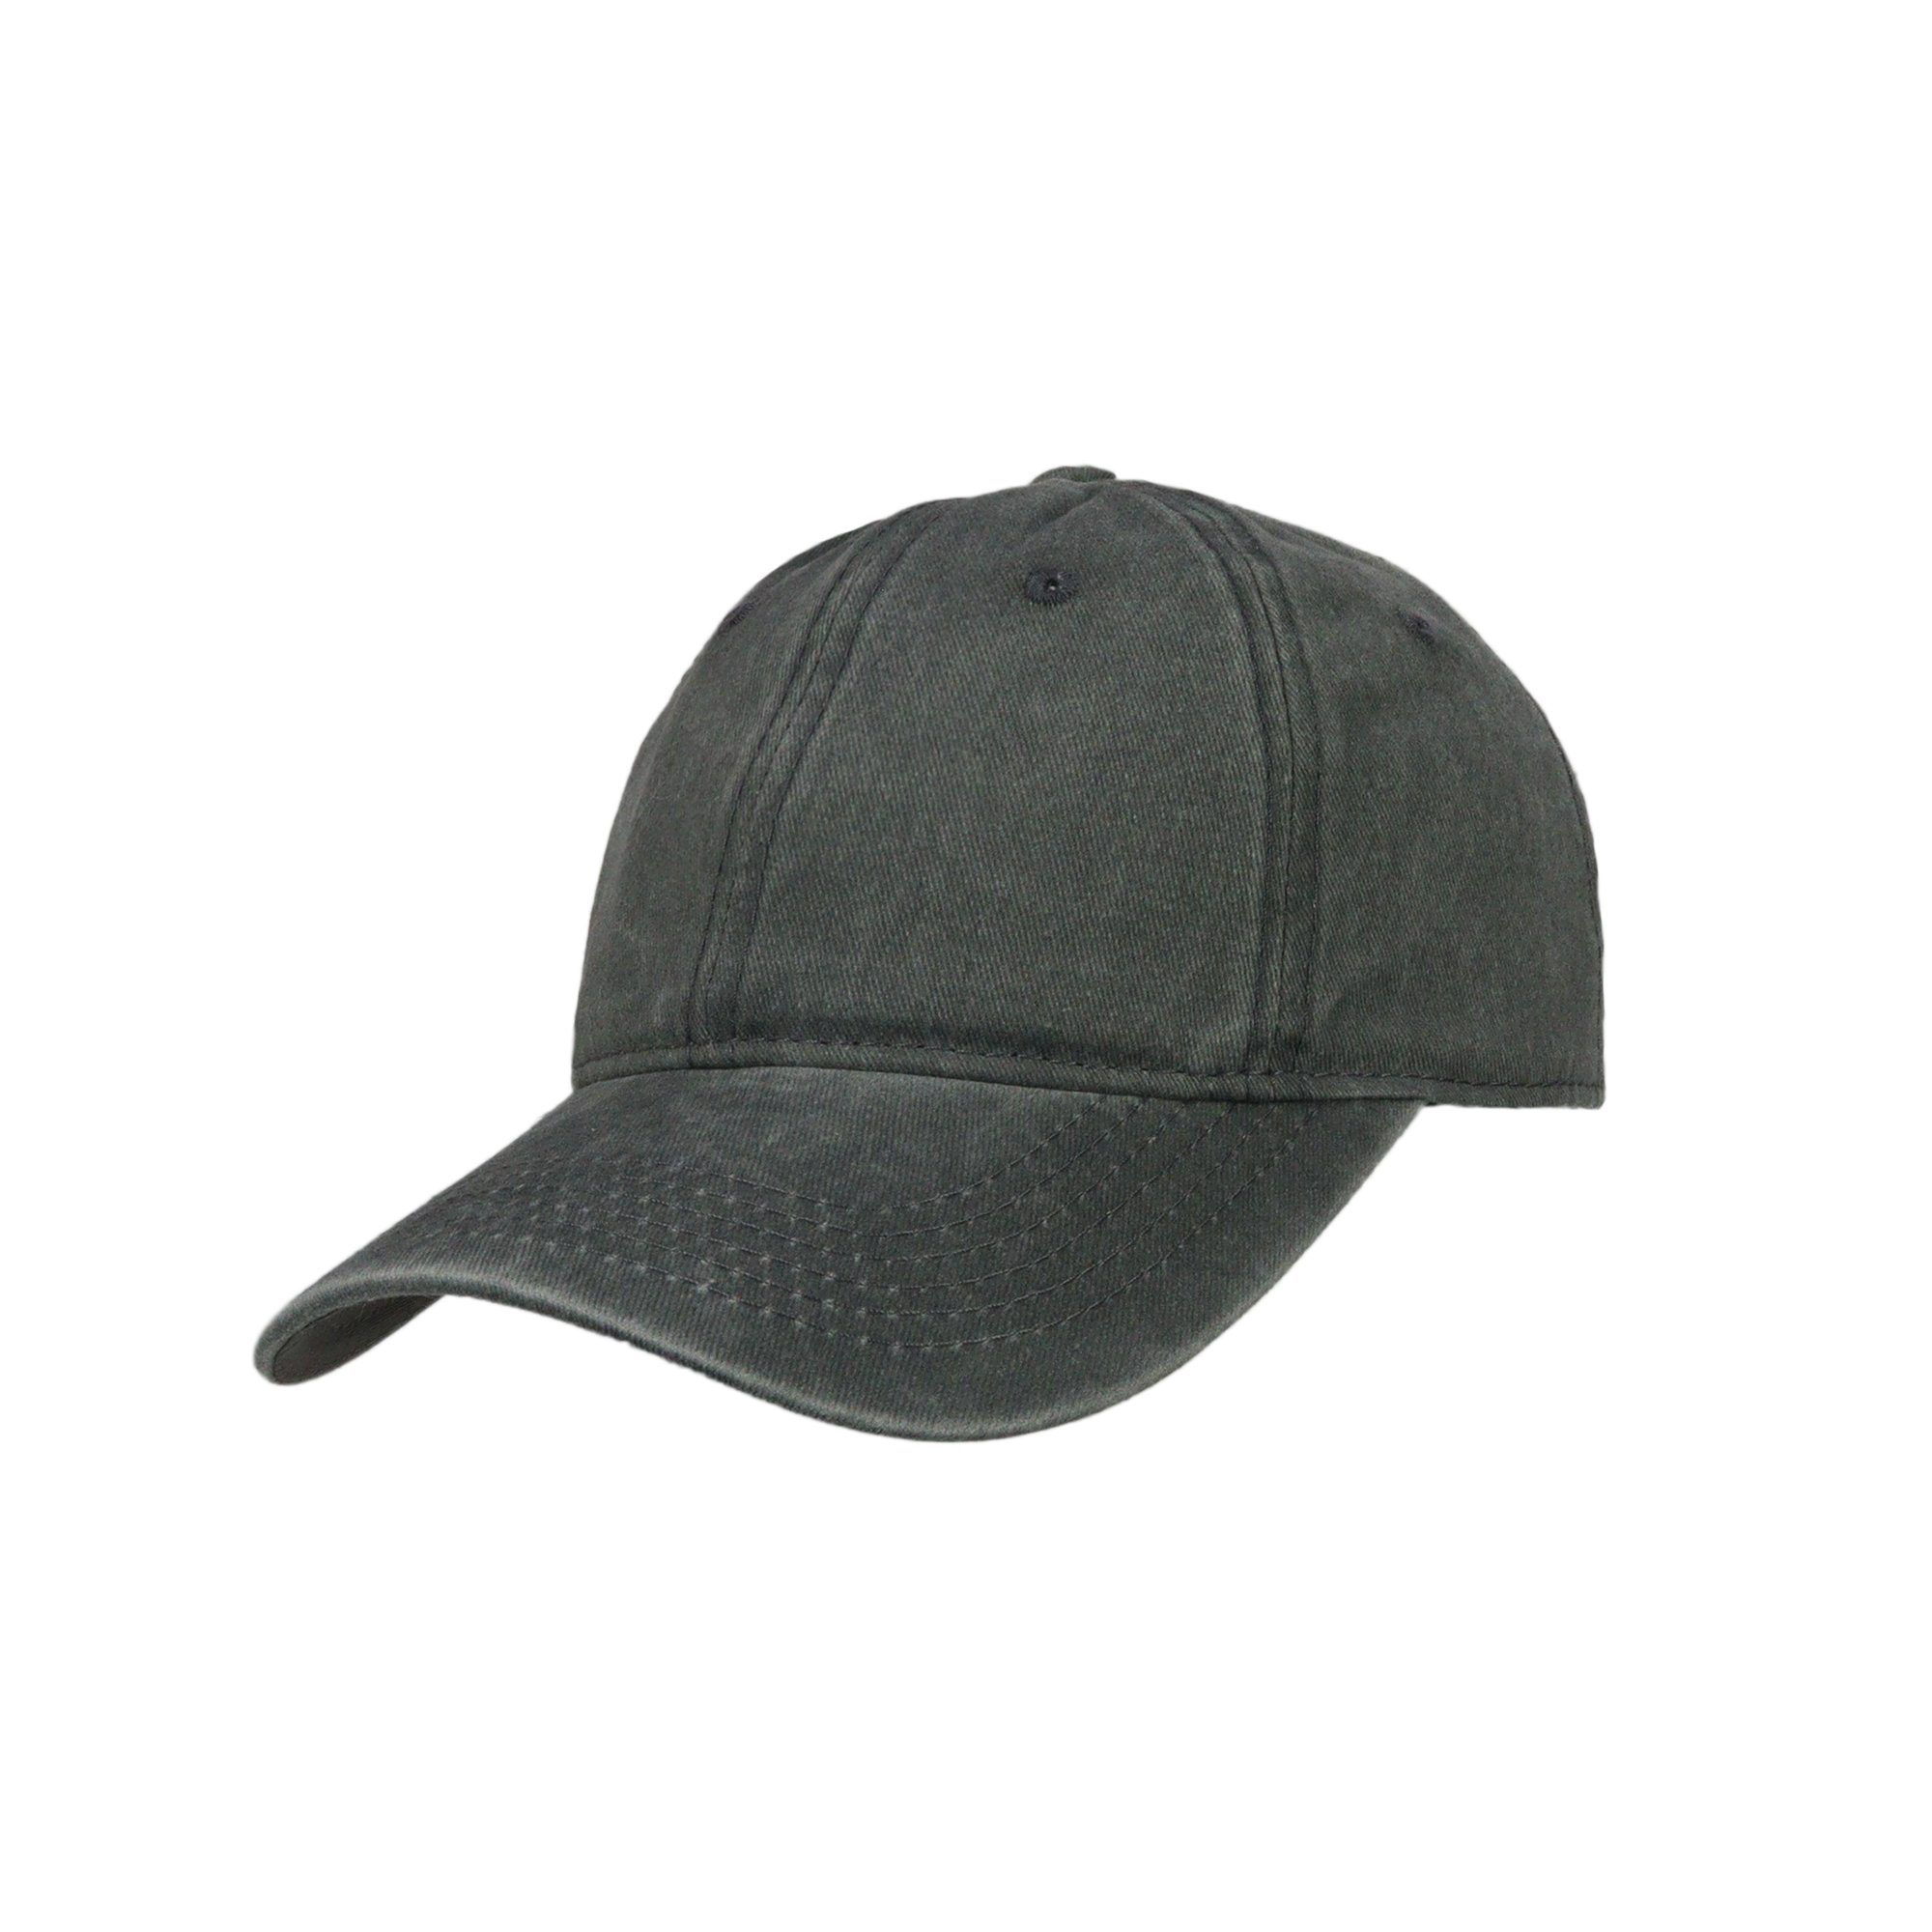 ZEBRO Baseball Cap Base Cap mit Belüftungslöcher grau